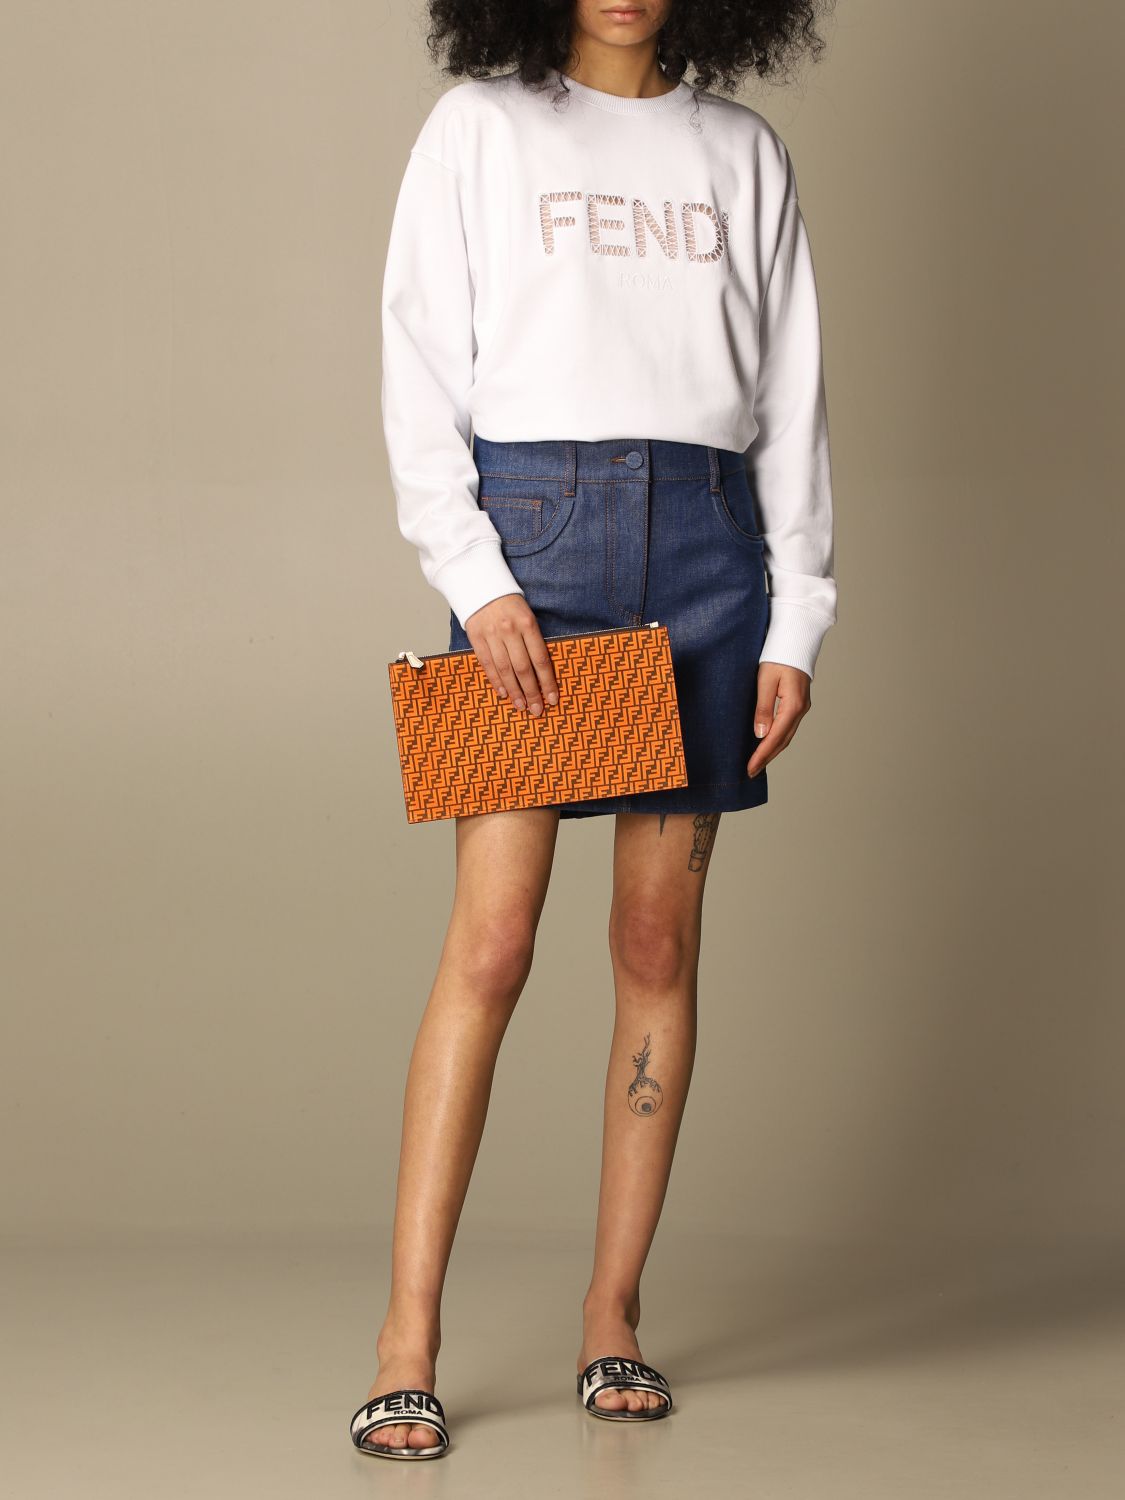 fendi skirt and top